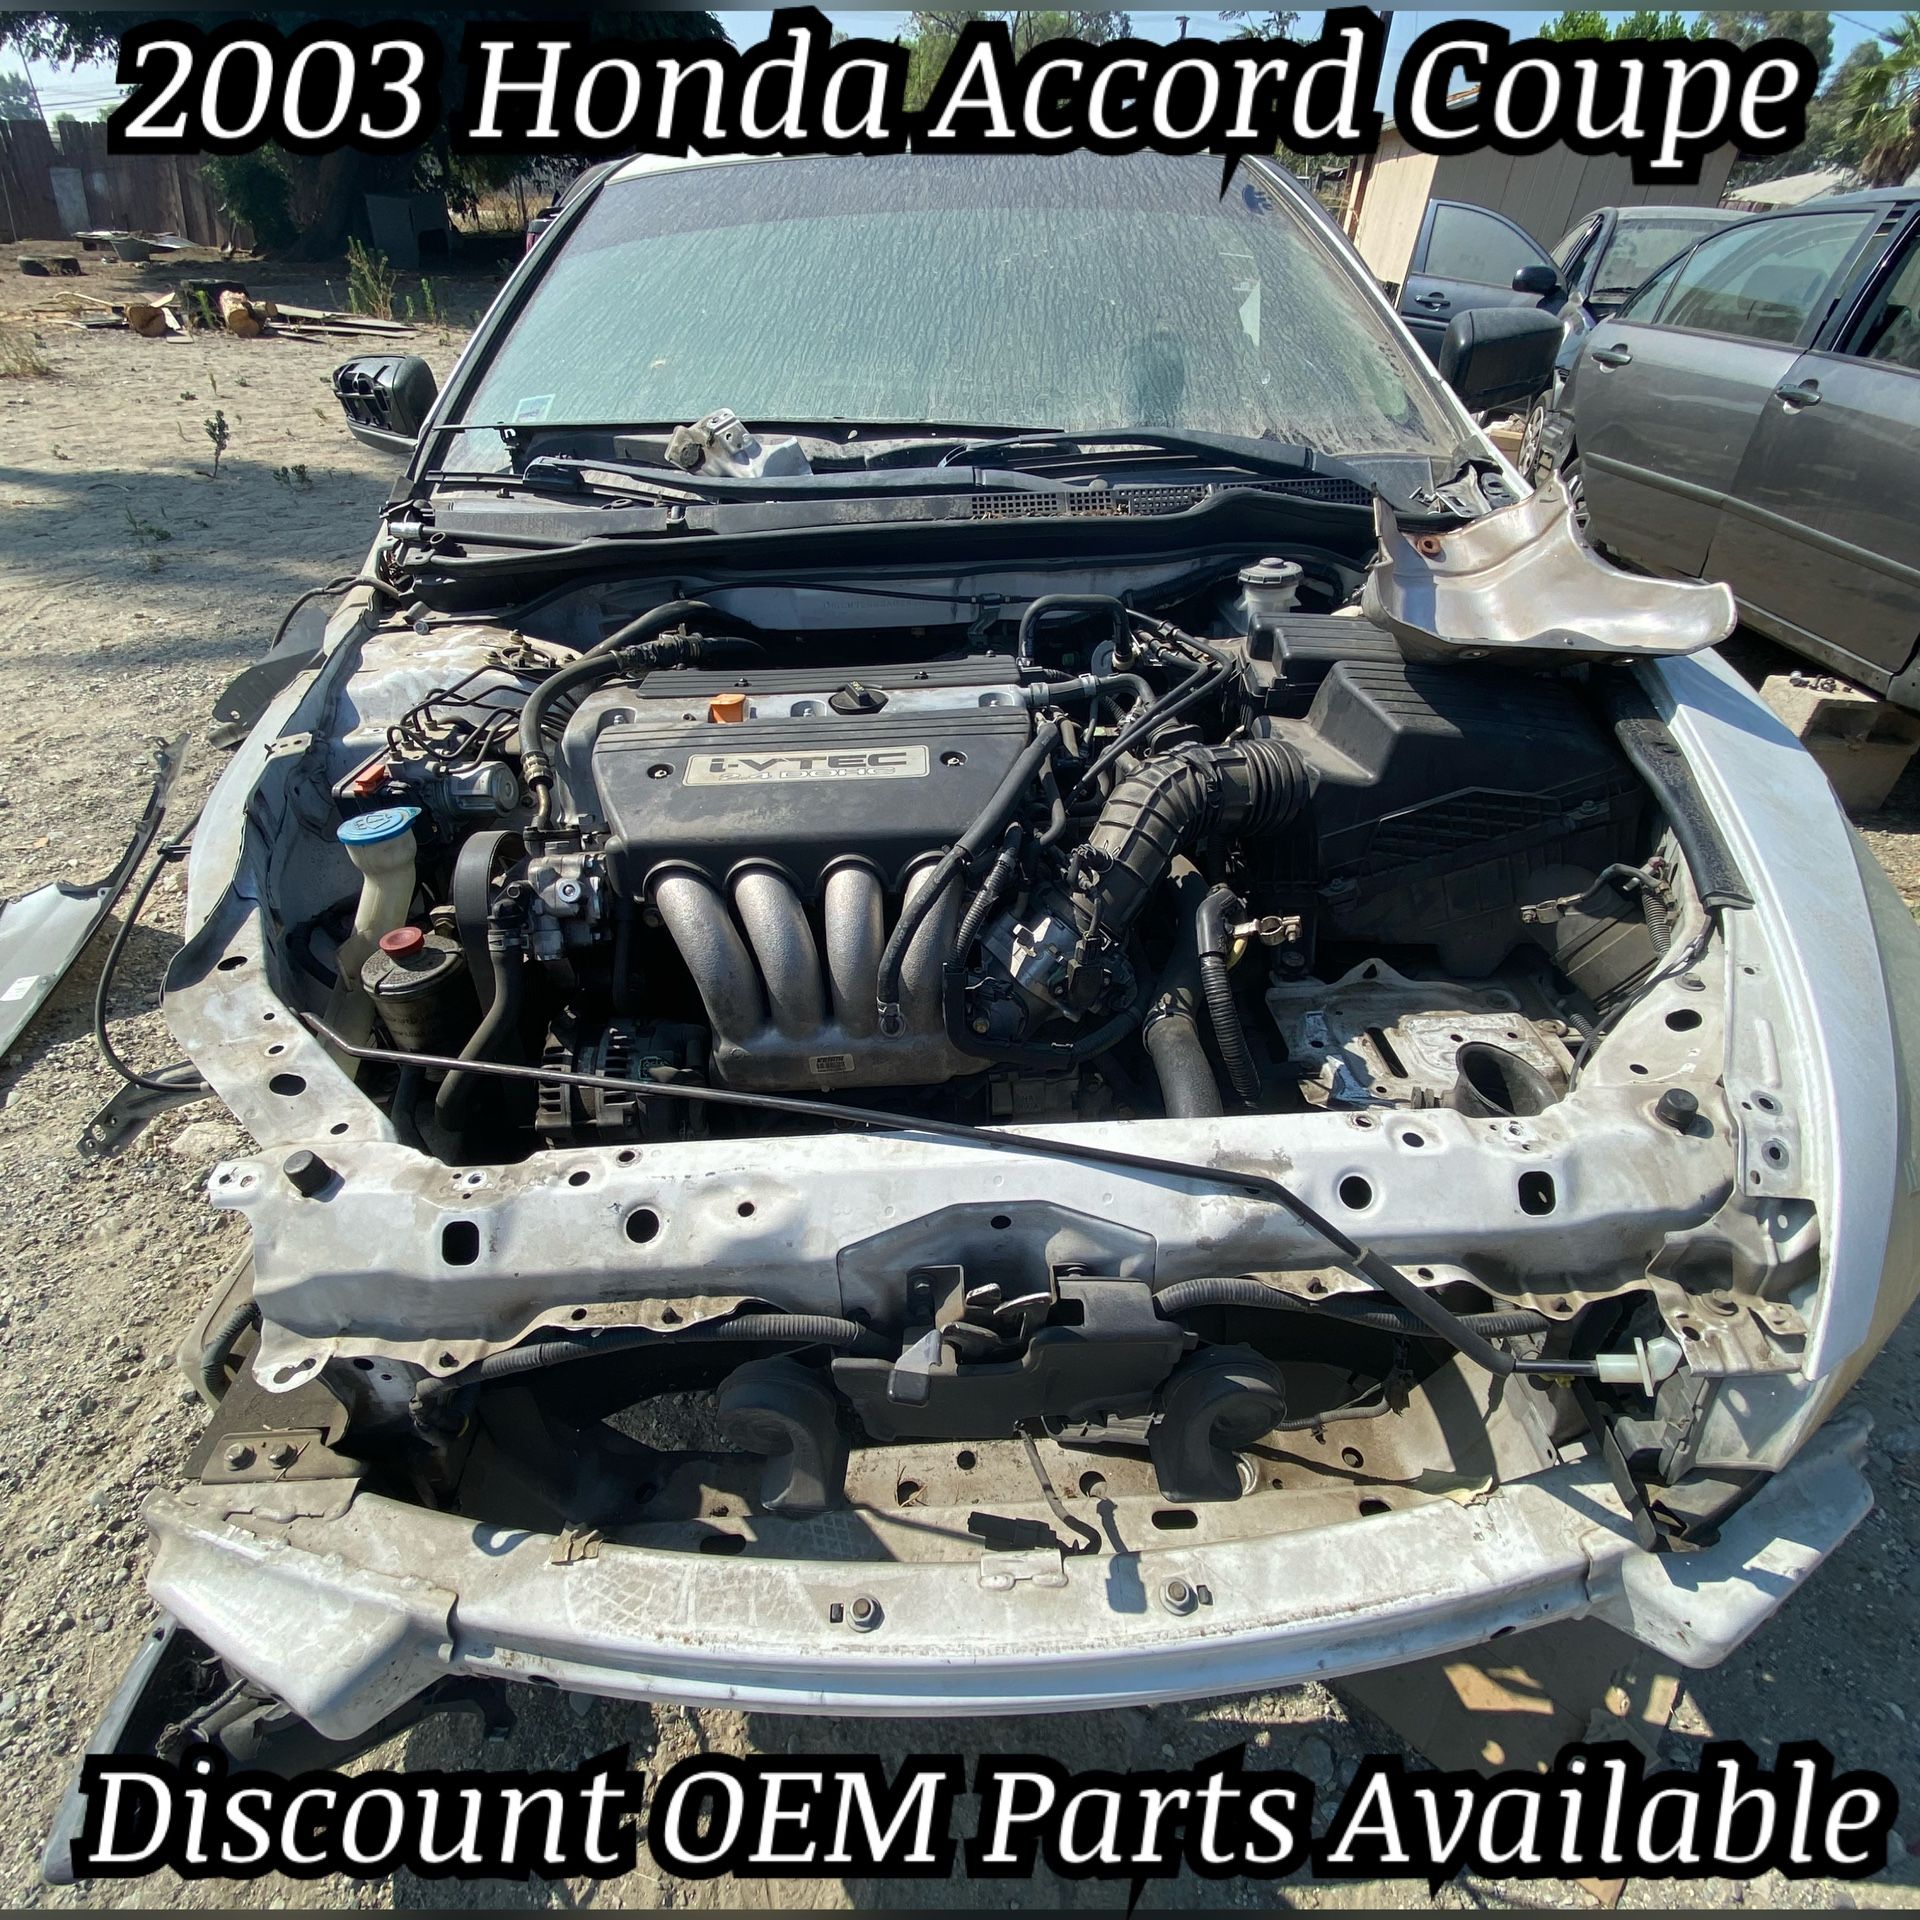 2nd Generation Honda OEM Parts 02-08 Accord